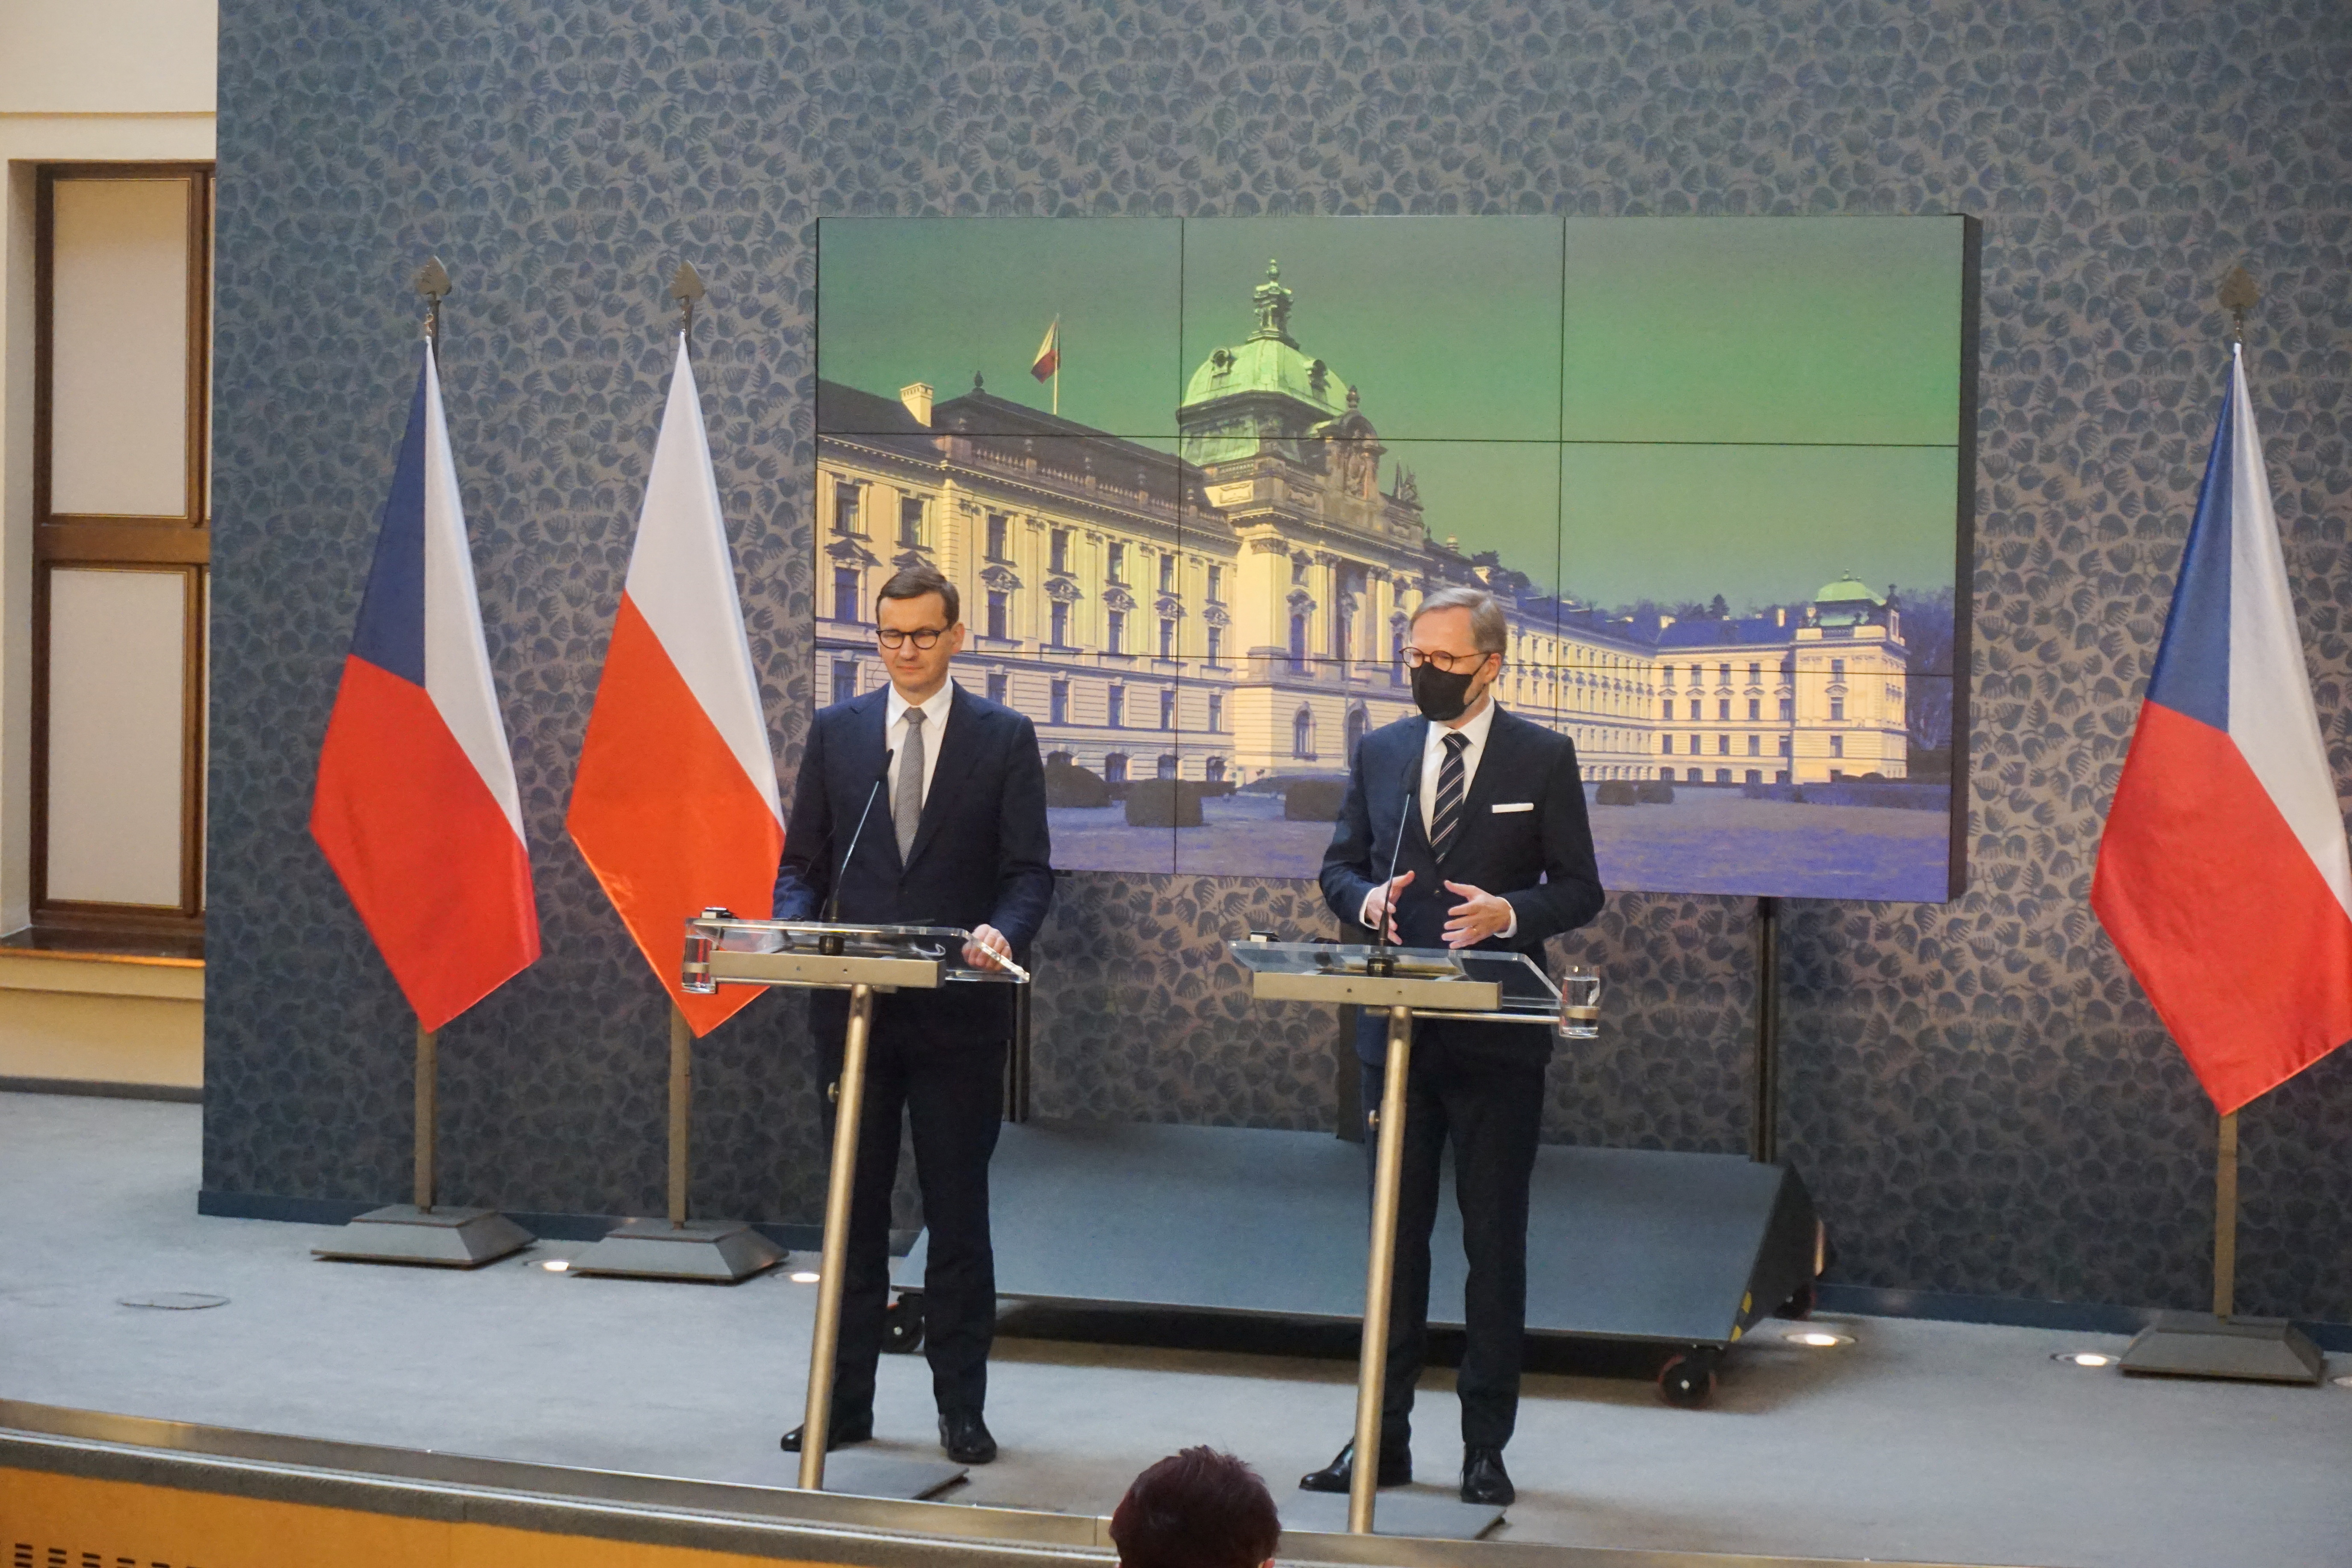 Polish PM Morawiecki meets Czech PM Fiala in Prague